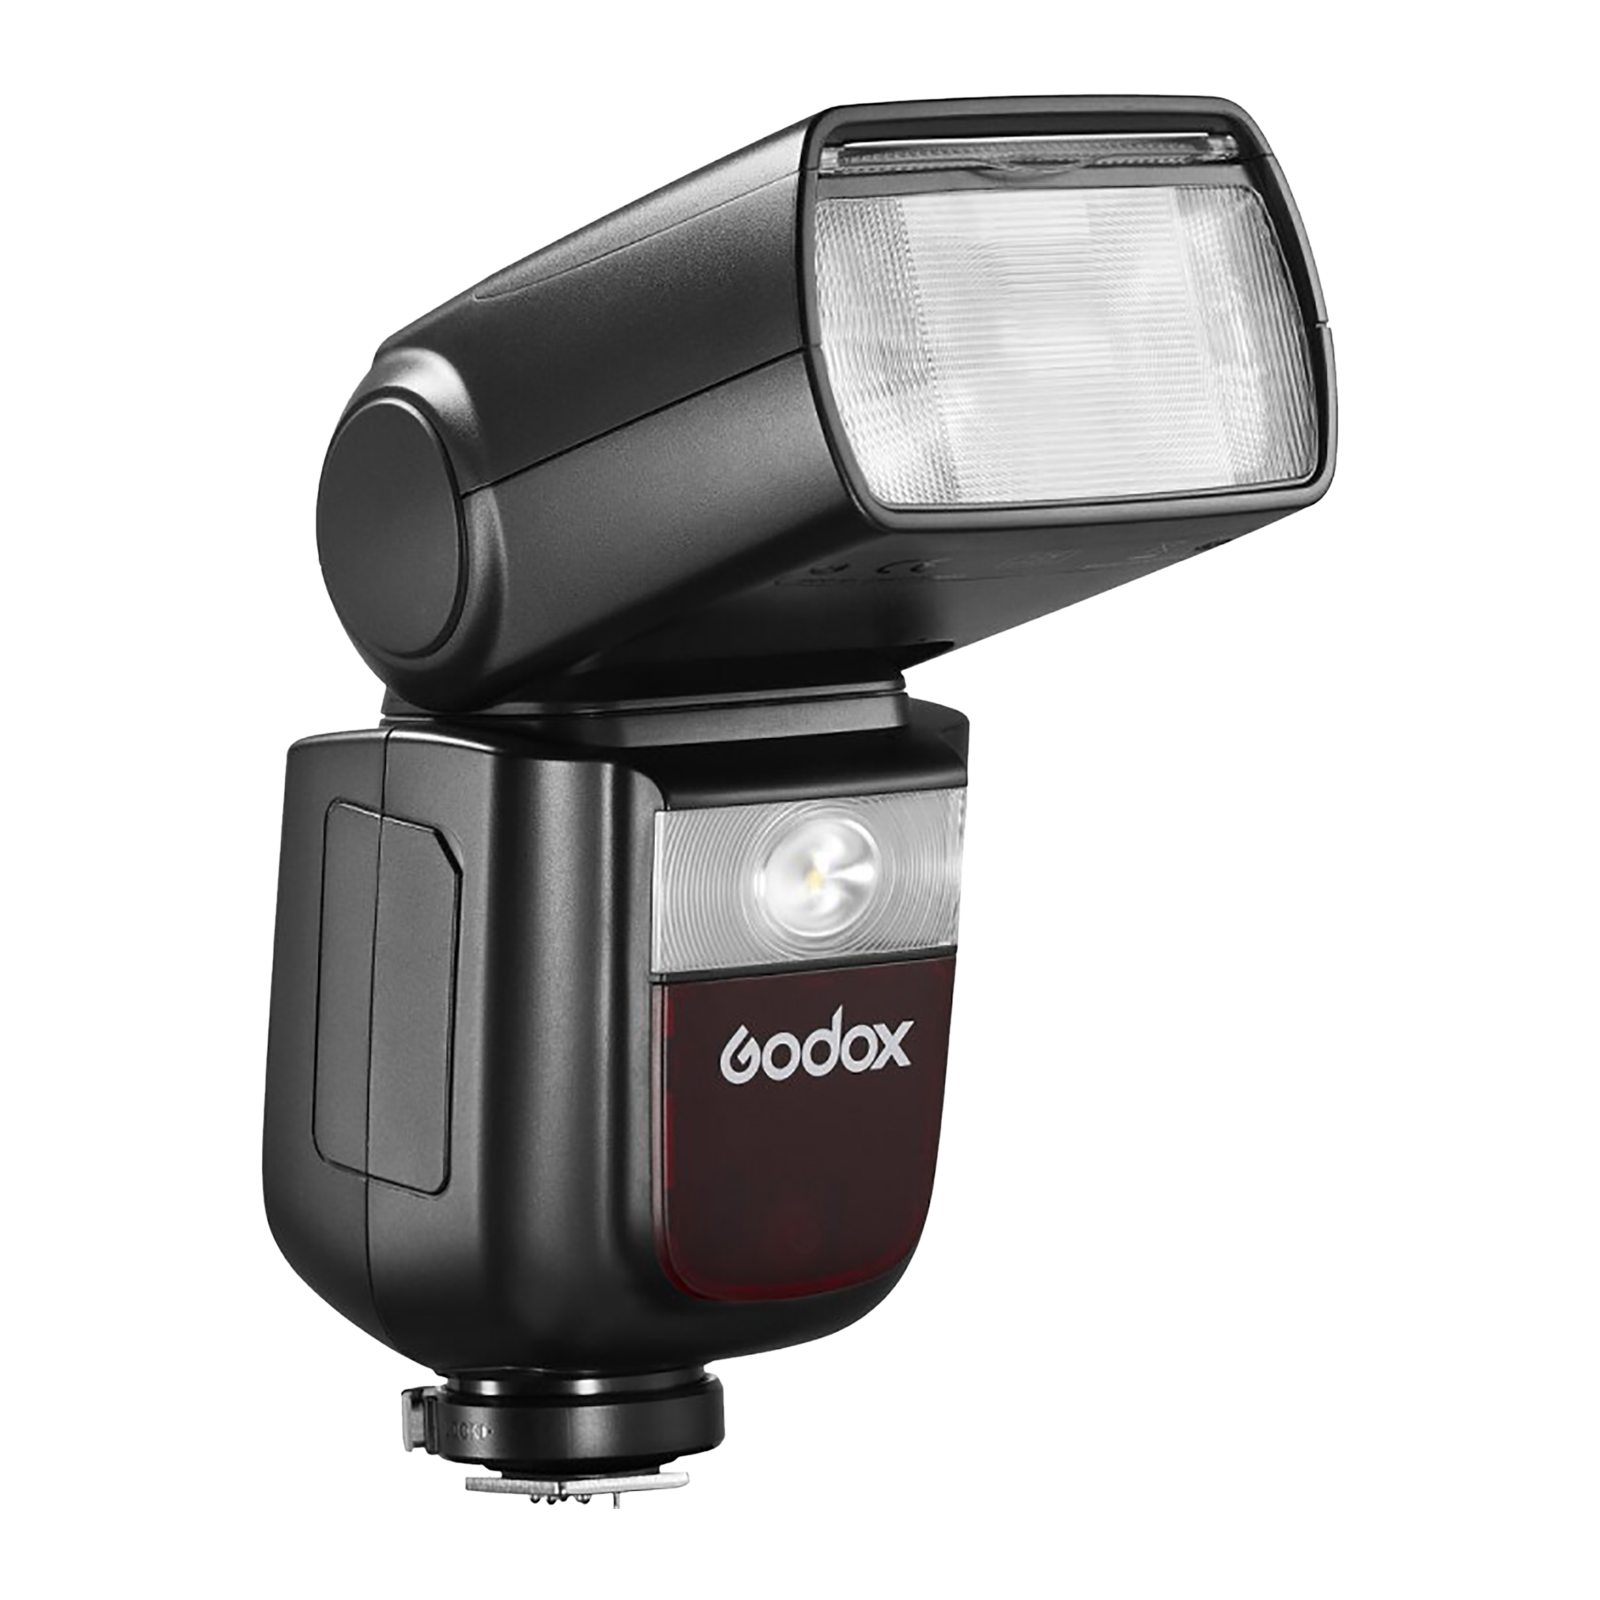 Godox V860IIIN Kit Camera Flash for Nikon (Quick Release Lock)